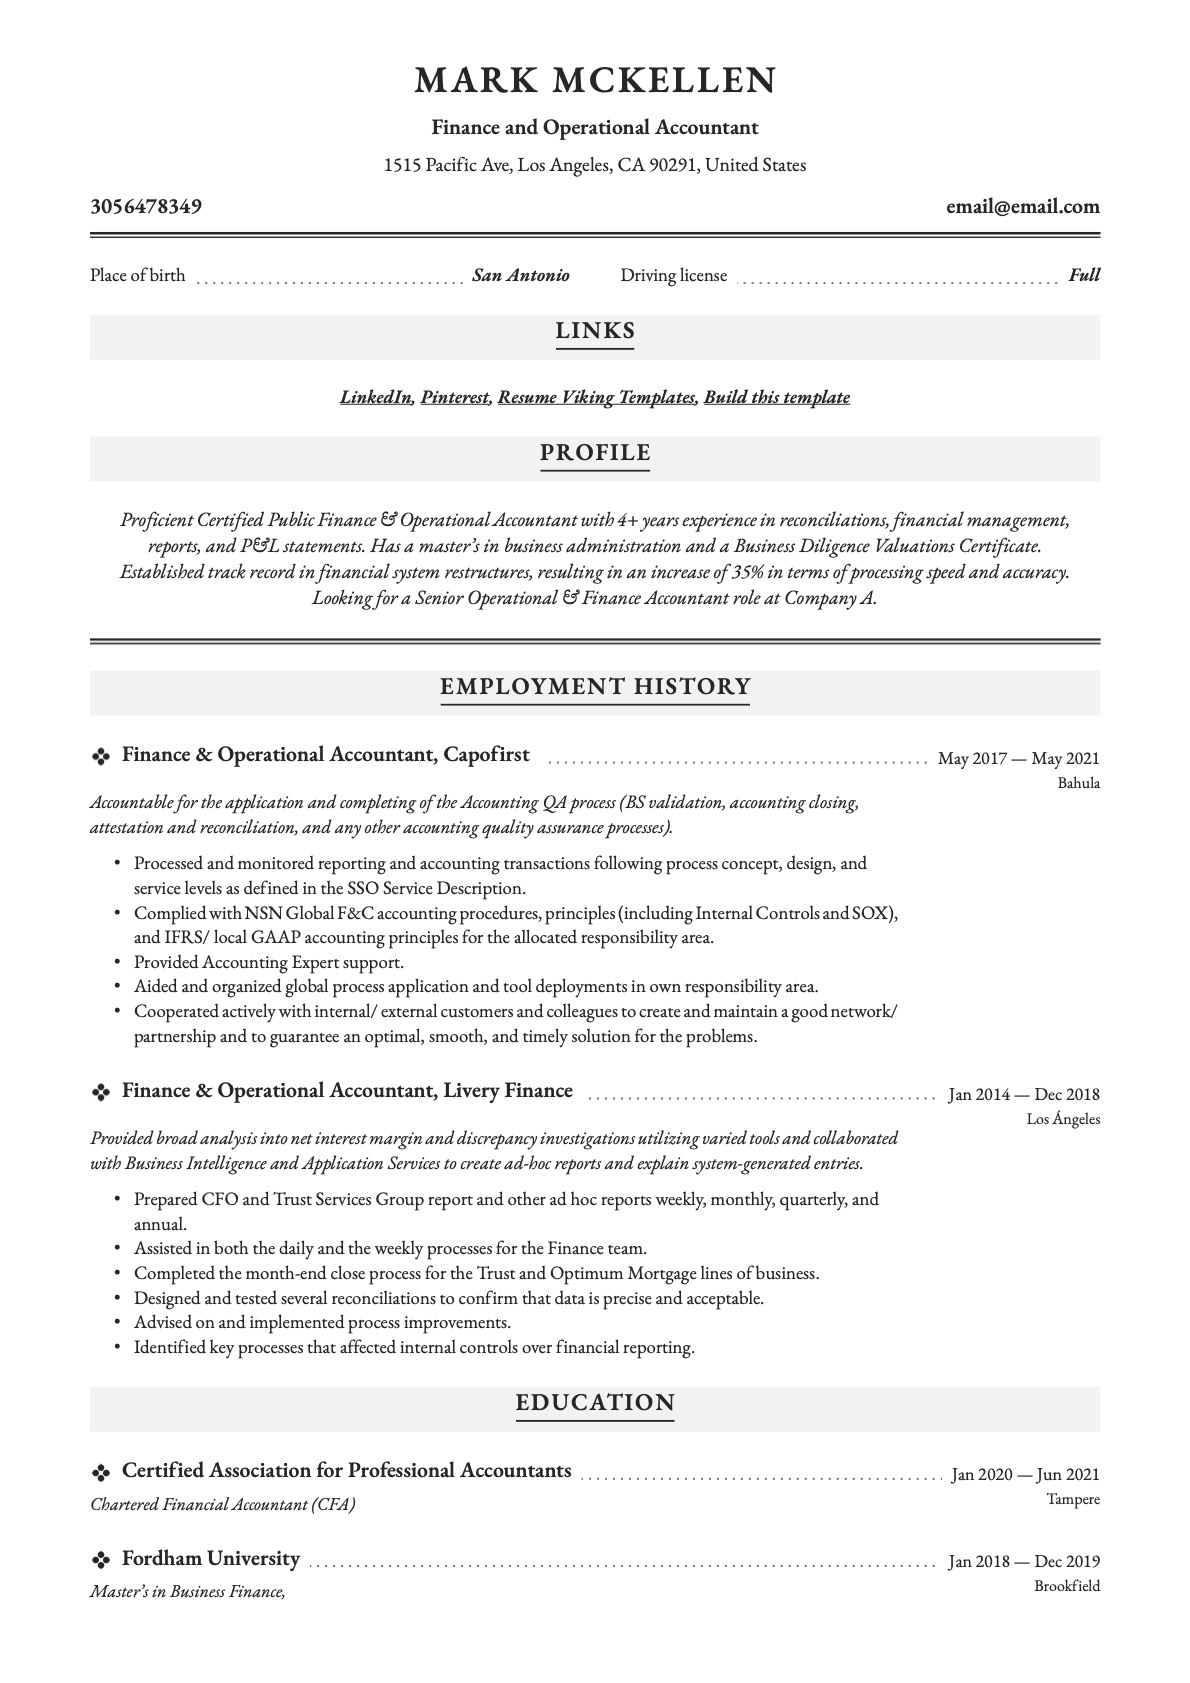 Finance & Operational Accountant Resume